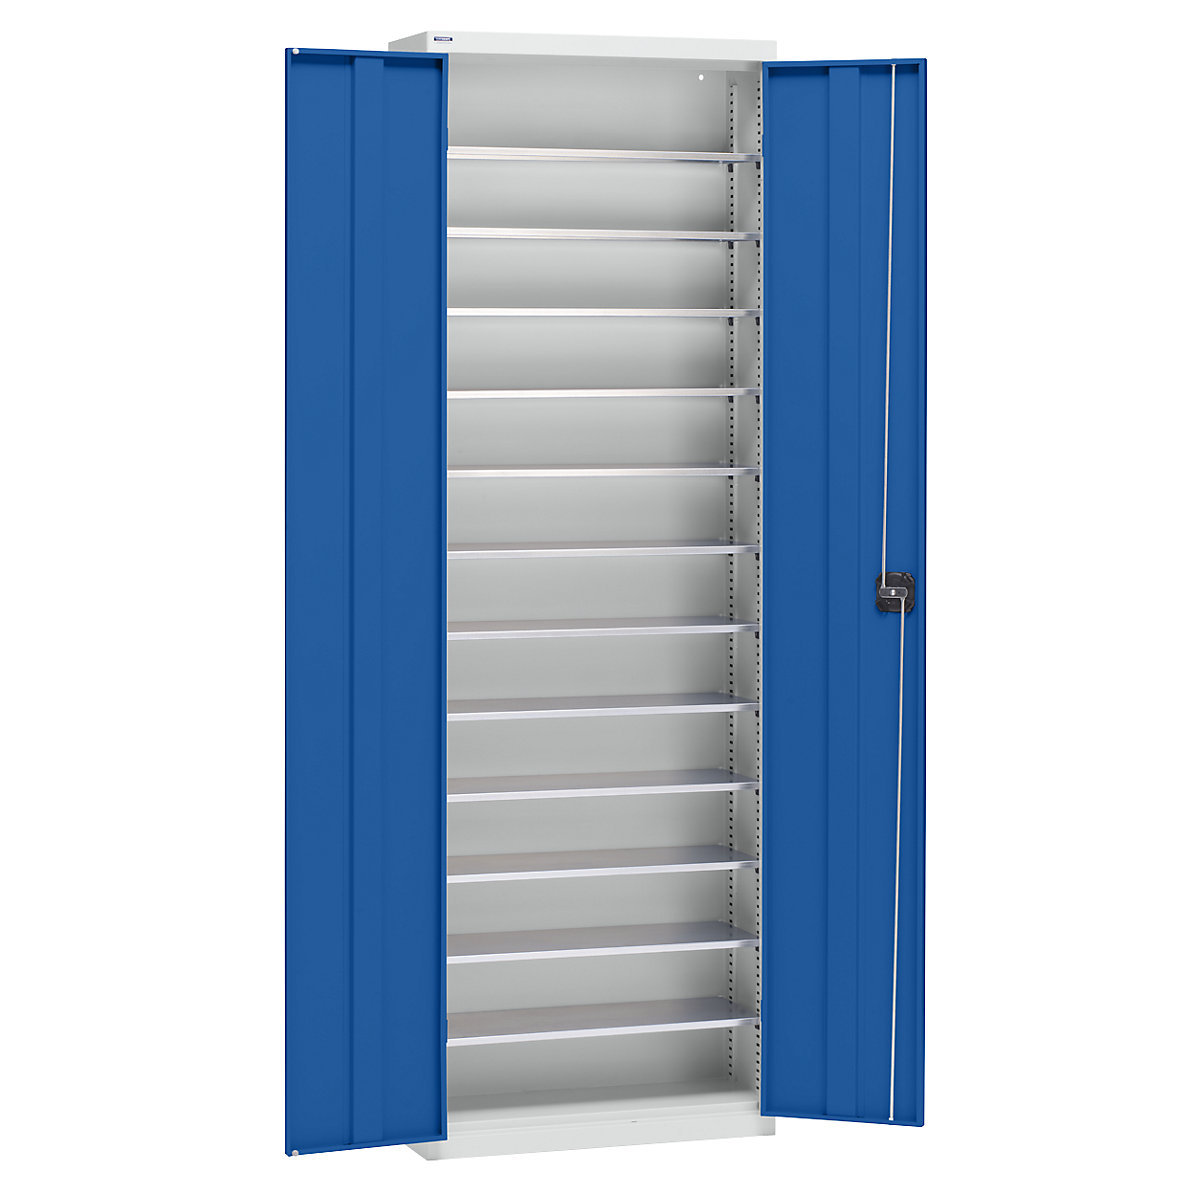 Storage cupboard made of sheet steel – eurokraft pro, height 2000 mm, light grey RAL 7035 / gentian blue RAL 5010, 12 shelves-11